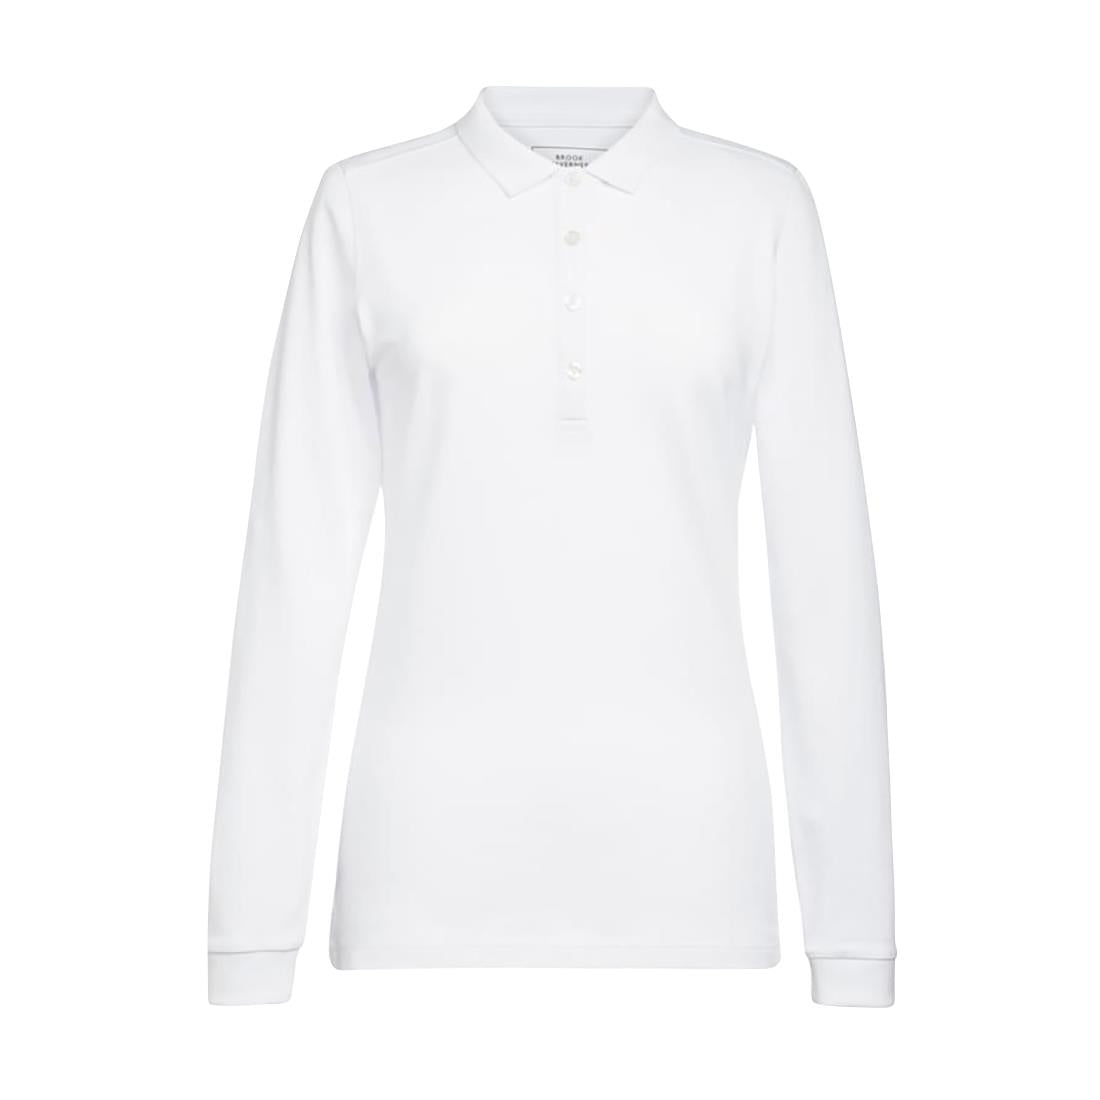 BA141-L Brook Taverner Anna Womens Long Sleeve Polo Shirt White Size L